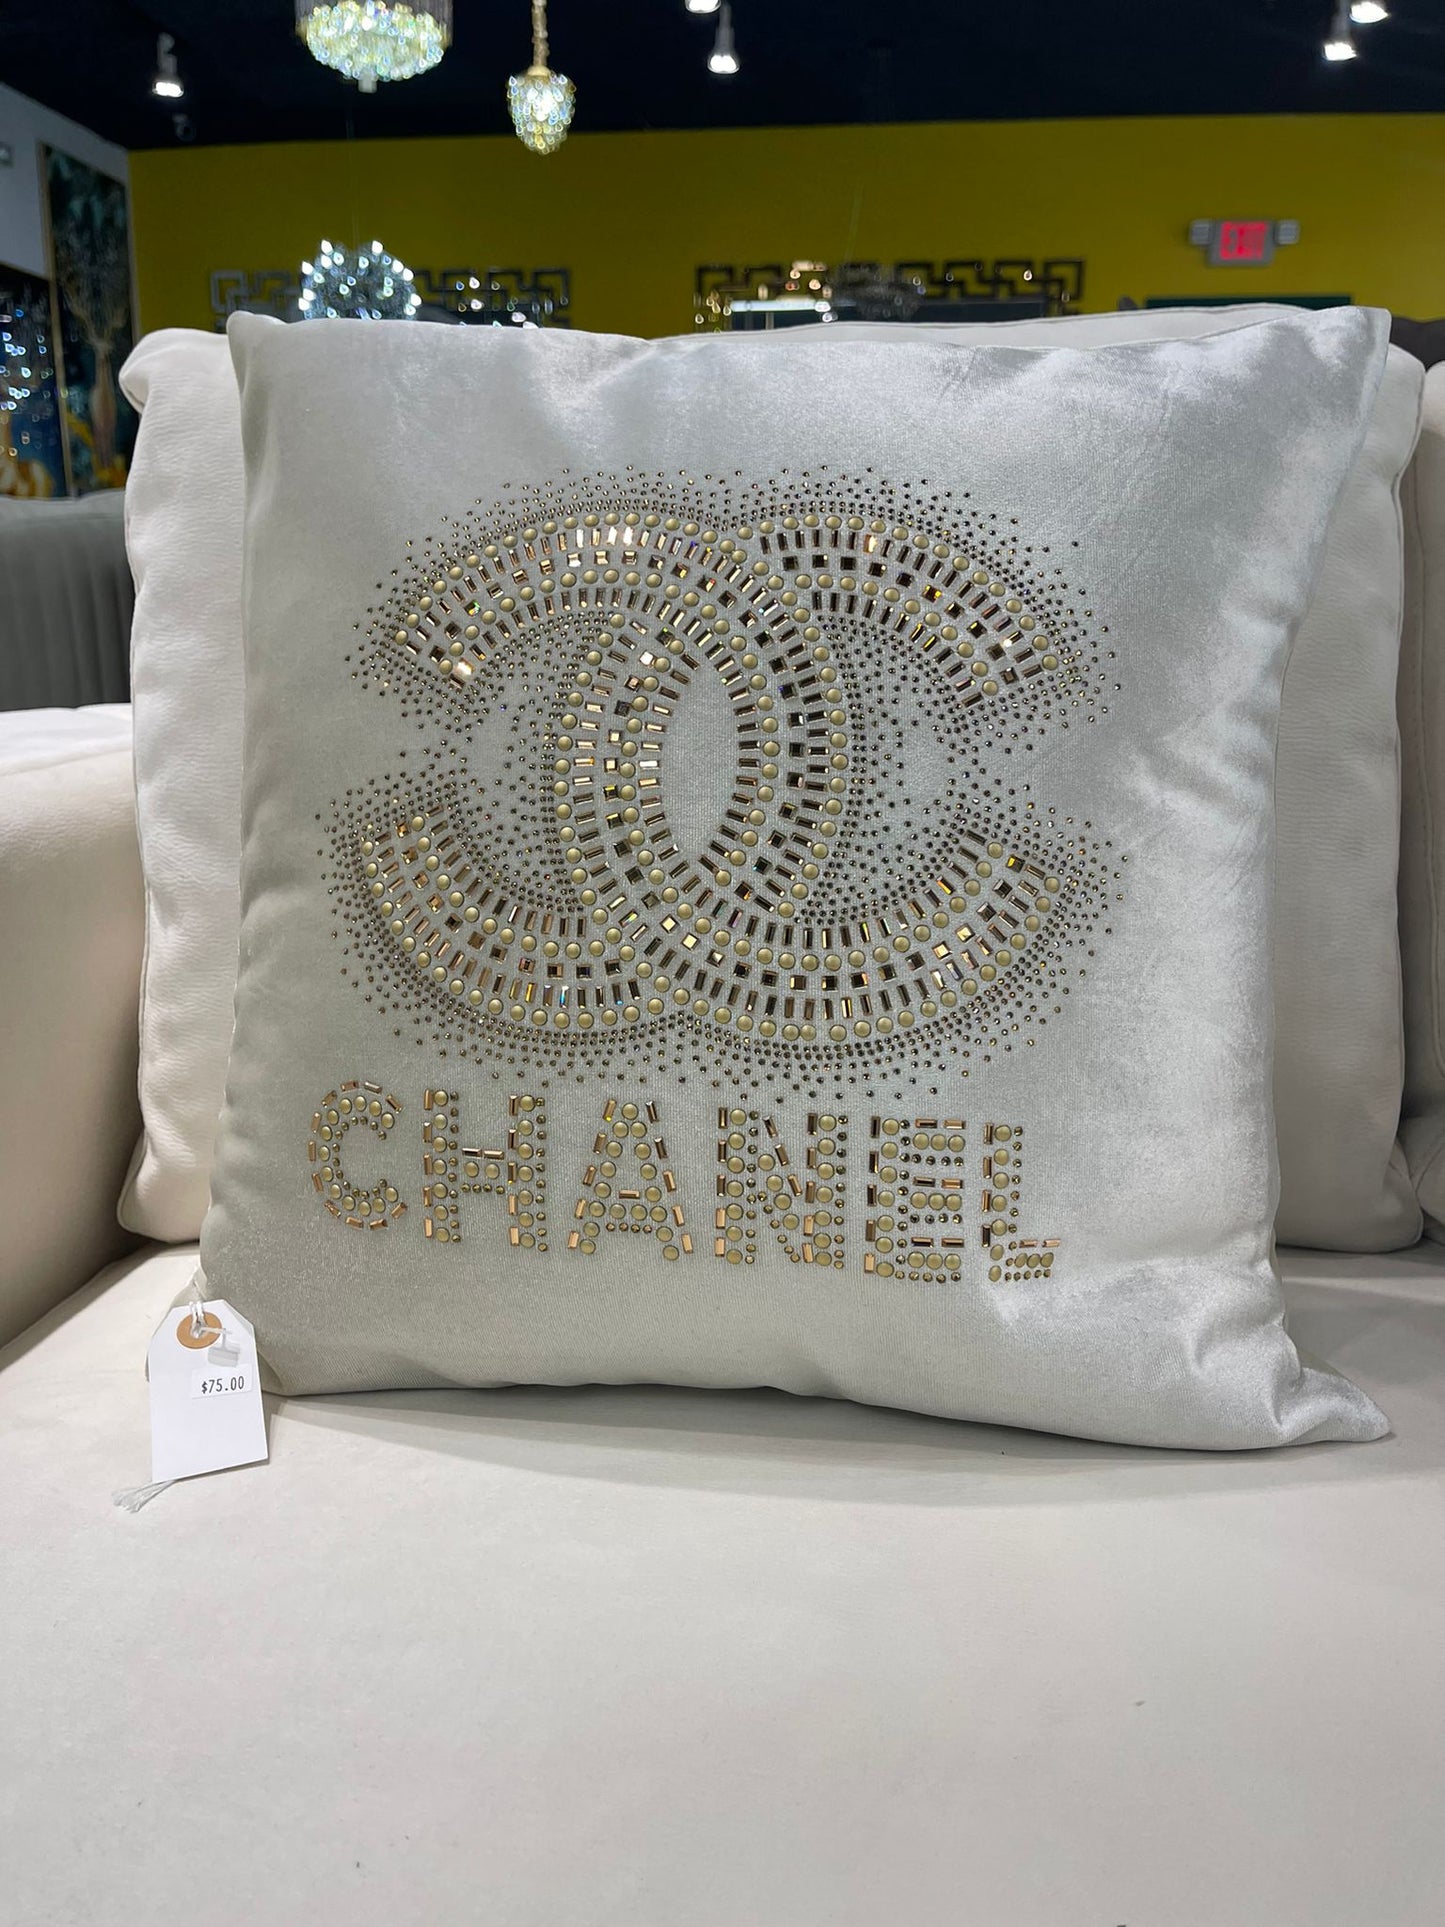 Black Chanel Throw pillow